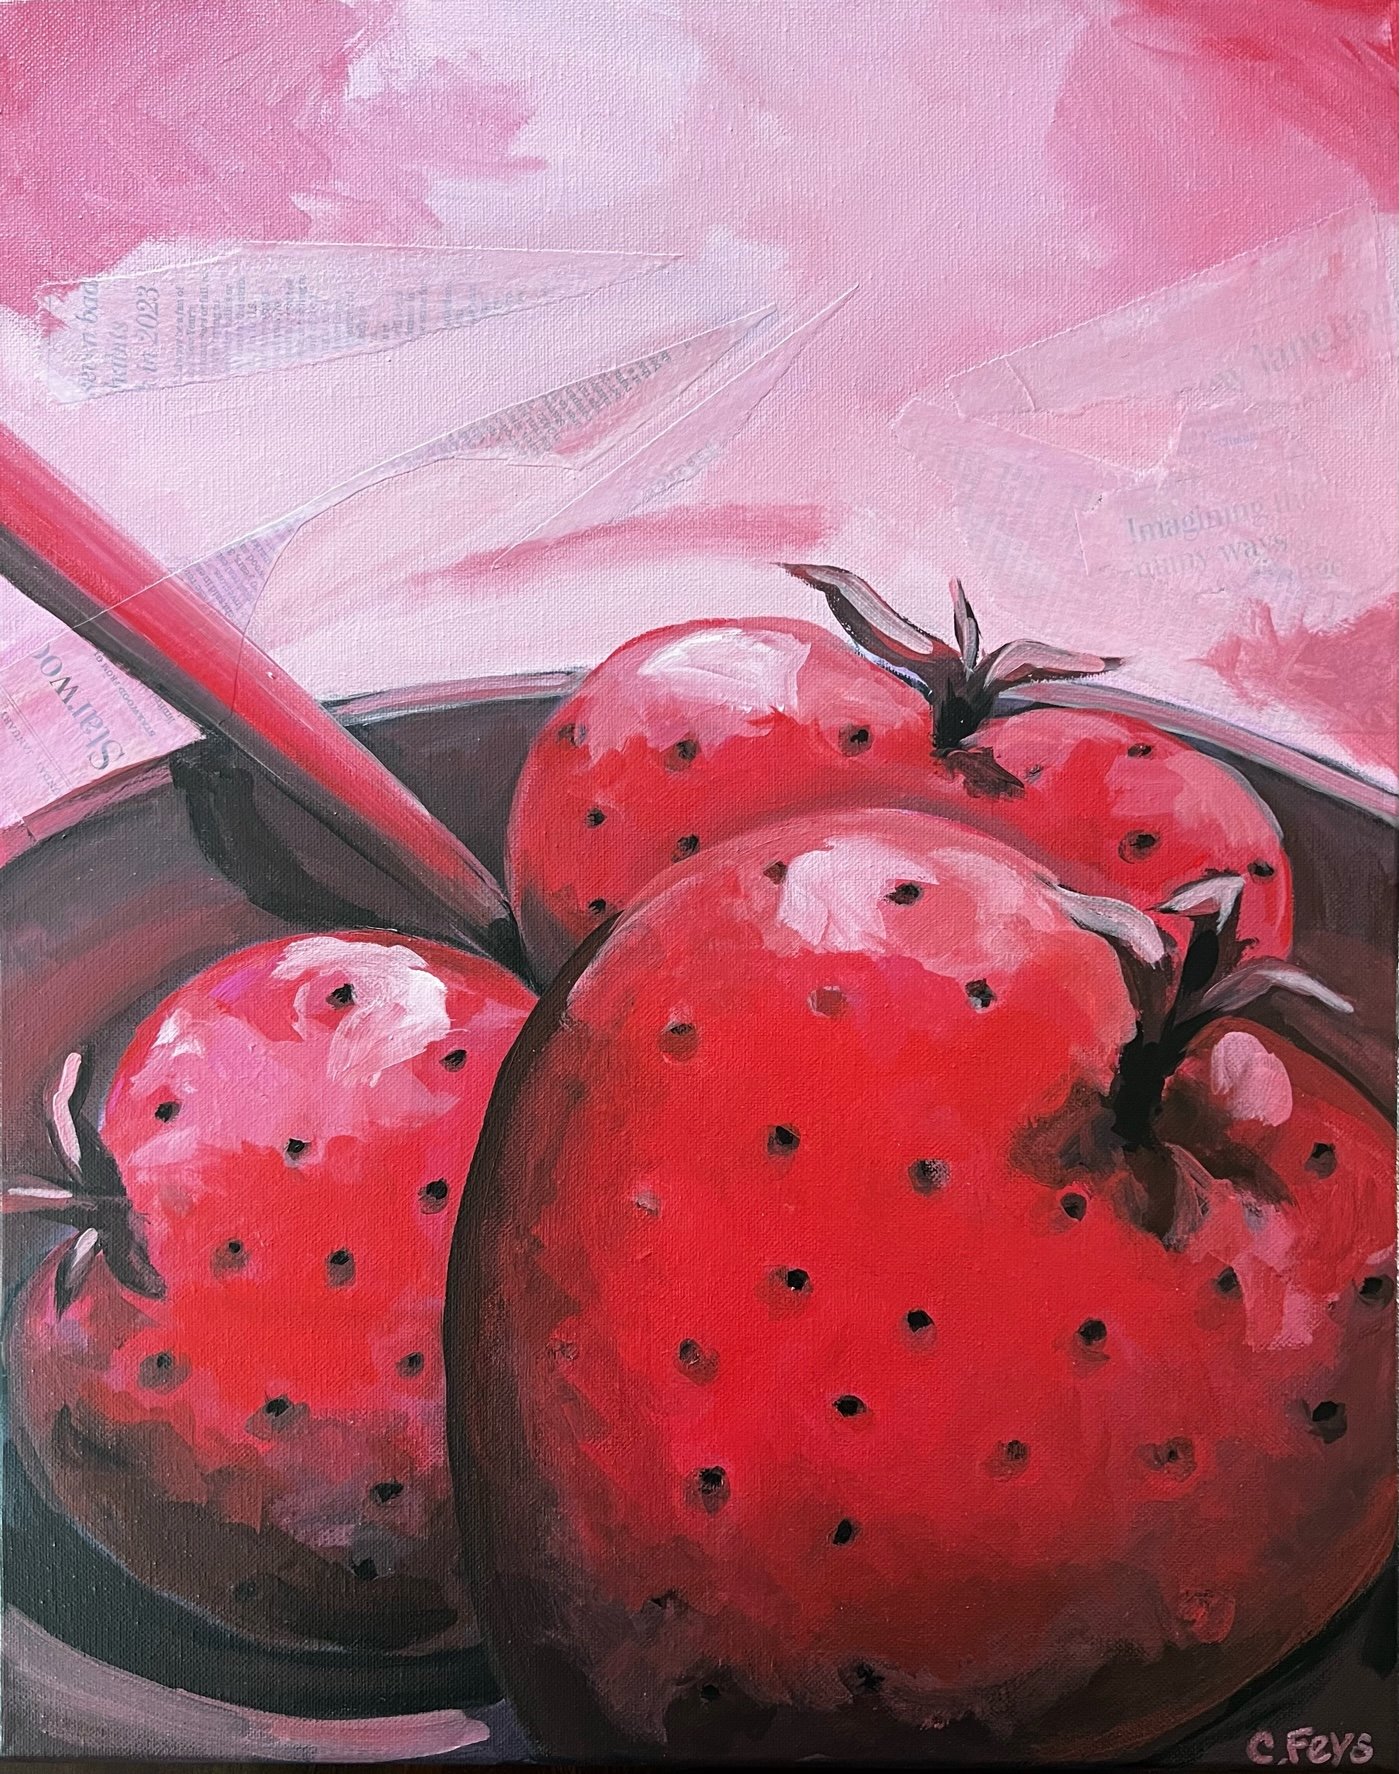 Monochromatic-A Bowl of Strawberries.jpeg